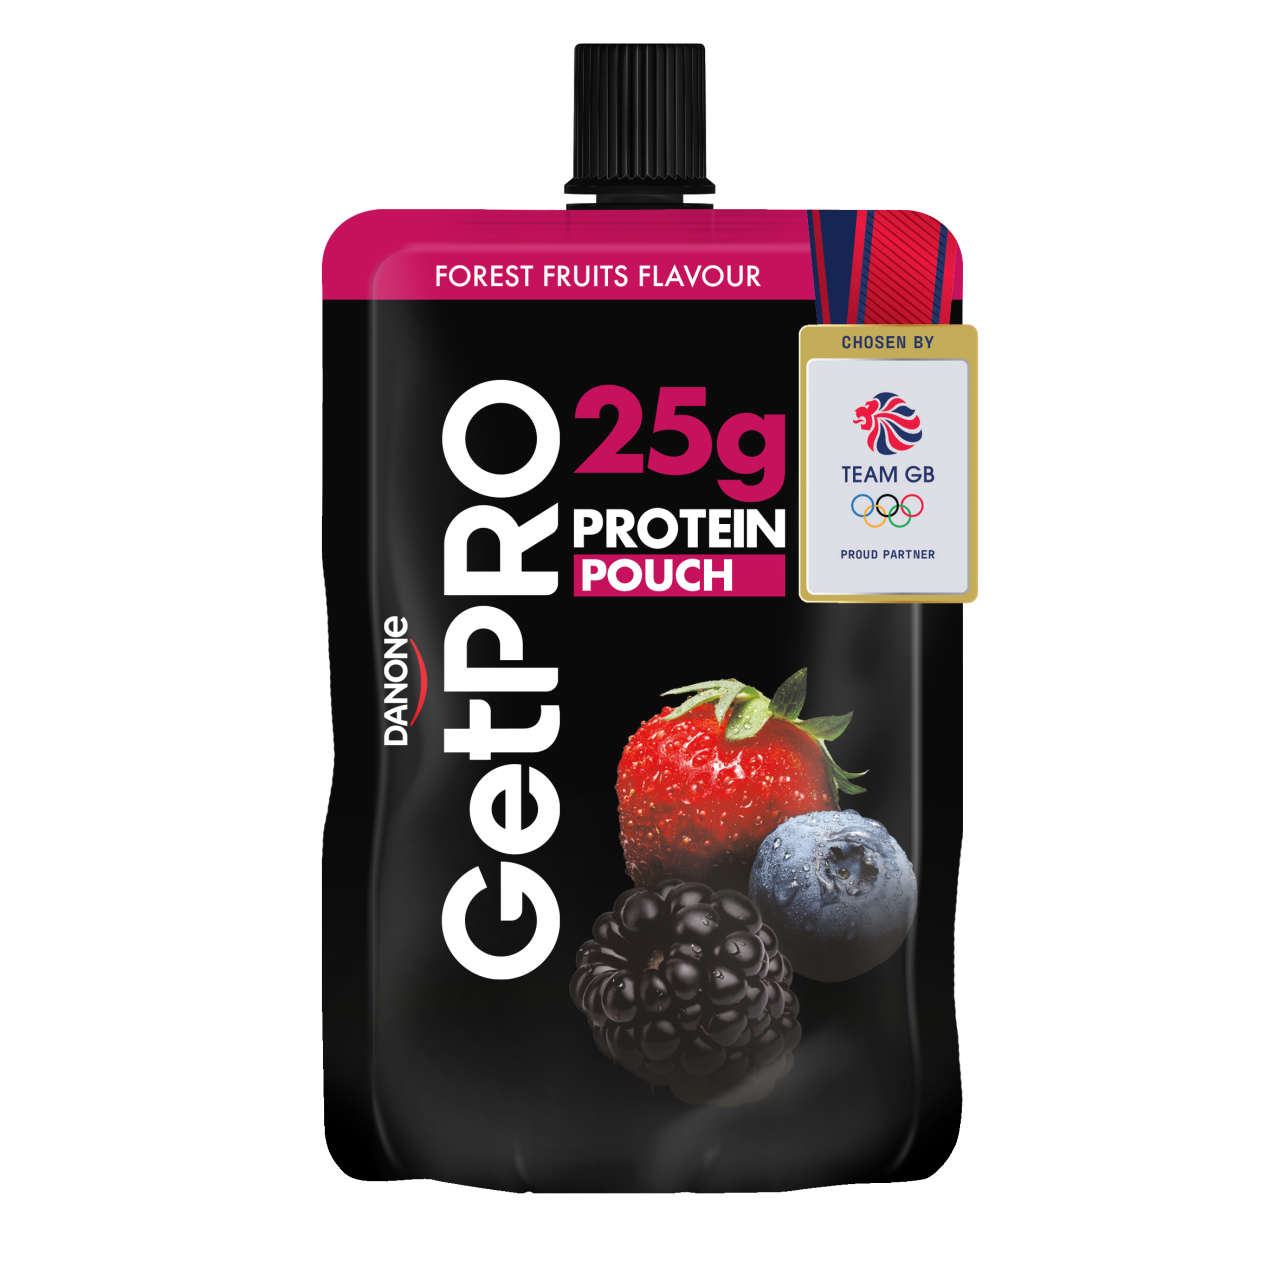 GetPRO Forest fruit flavour protein pouch